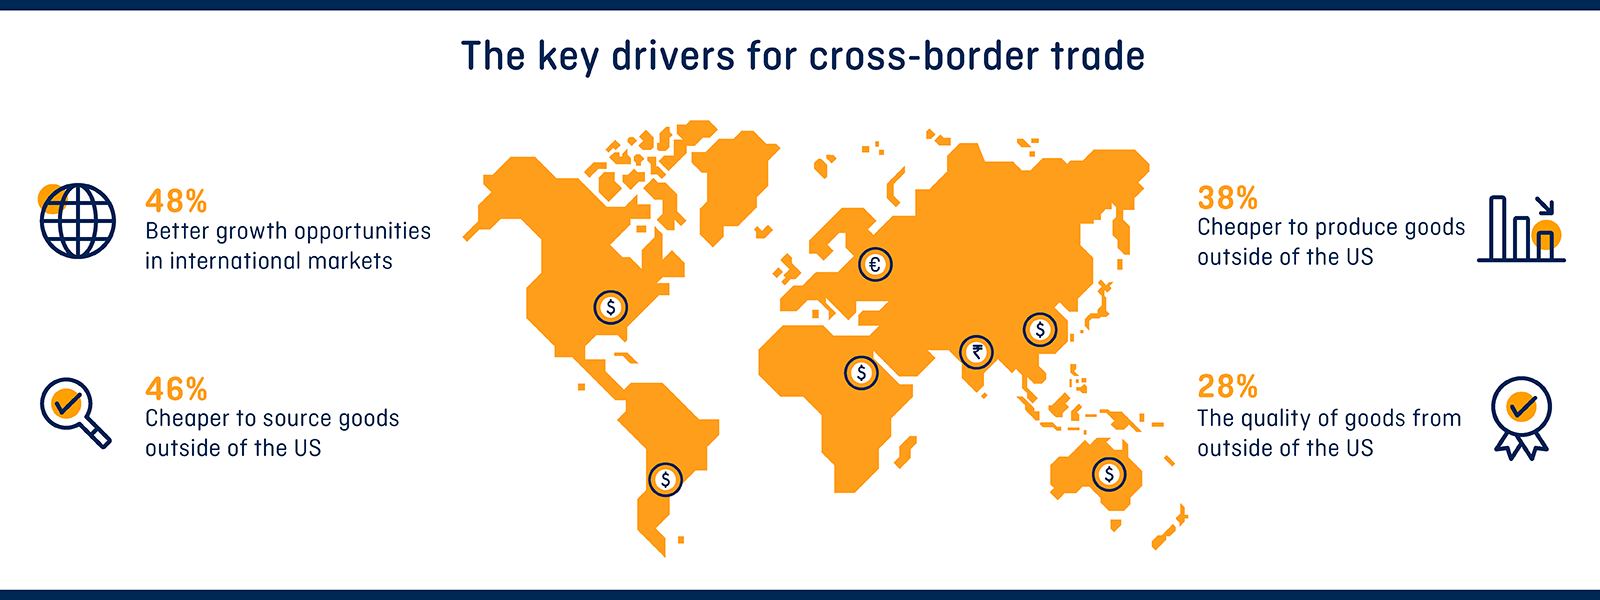 Key drivers for cross-border trade